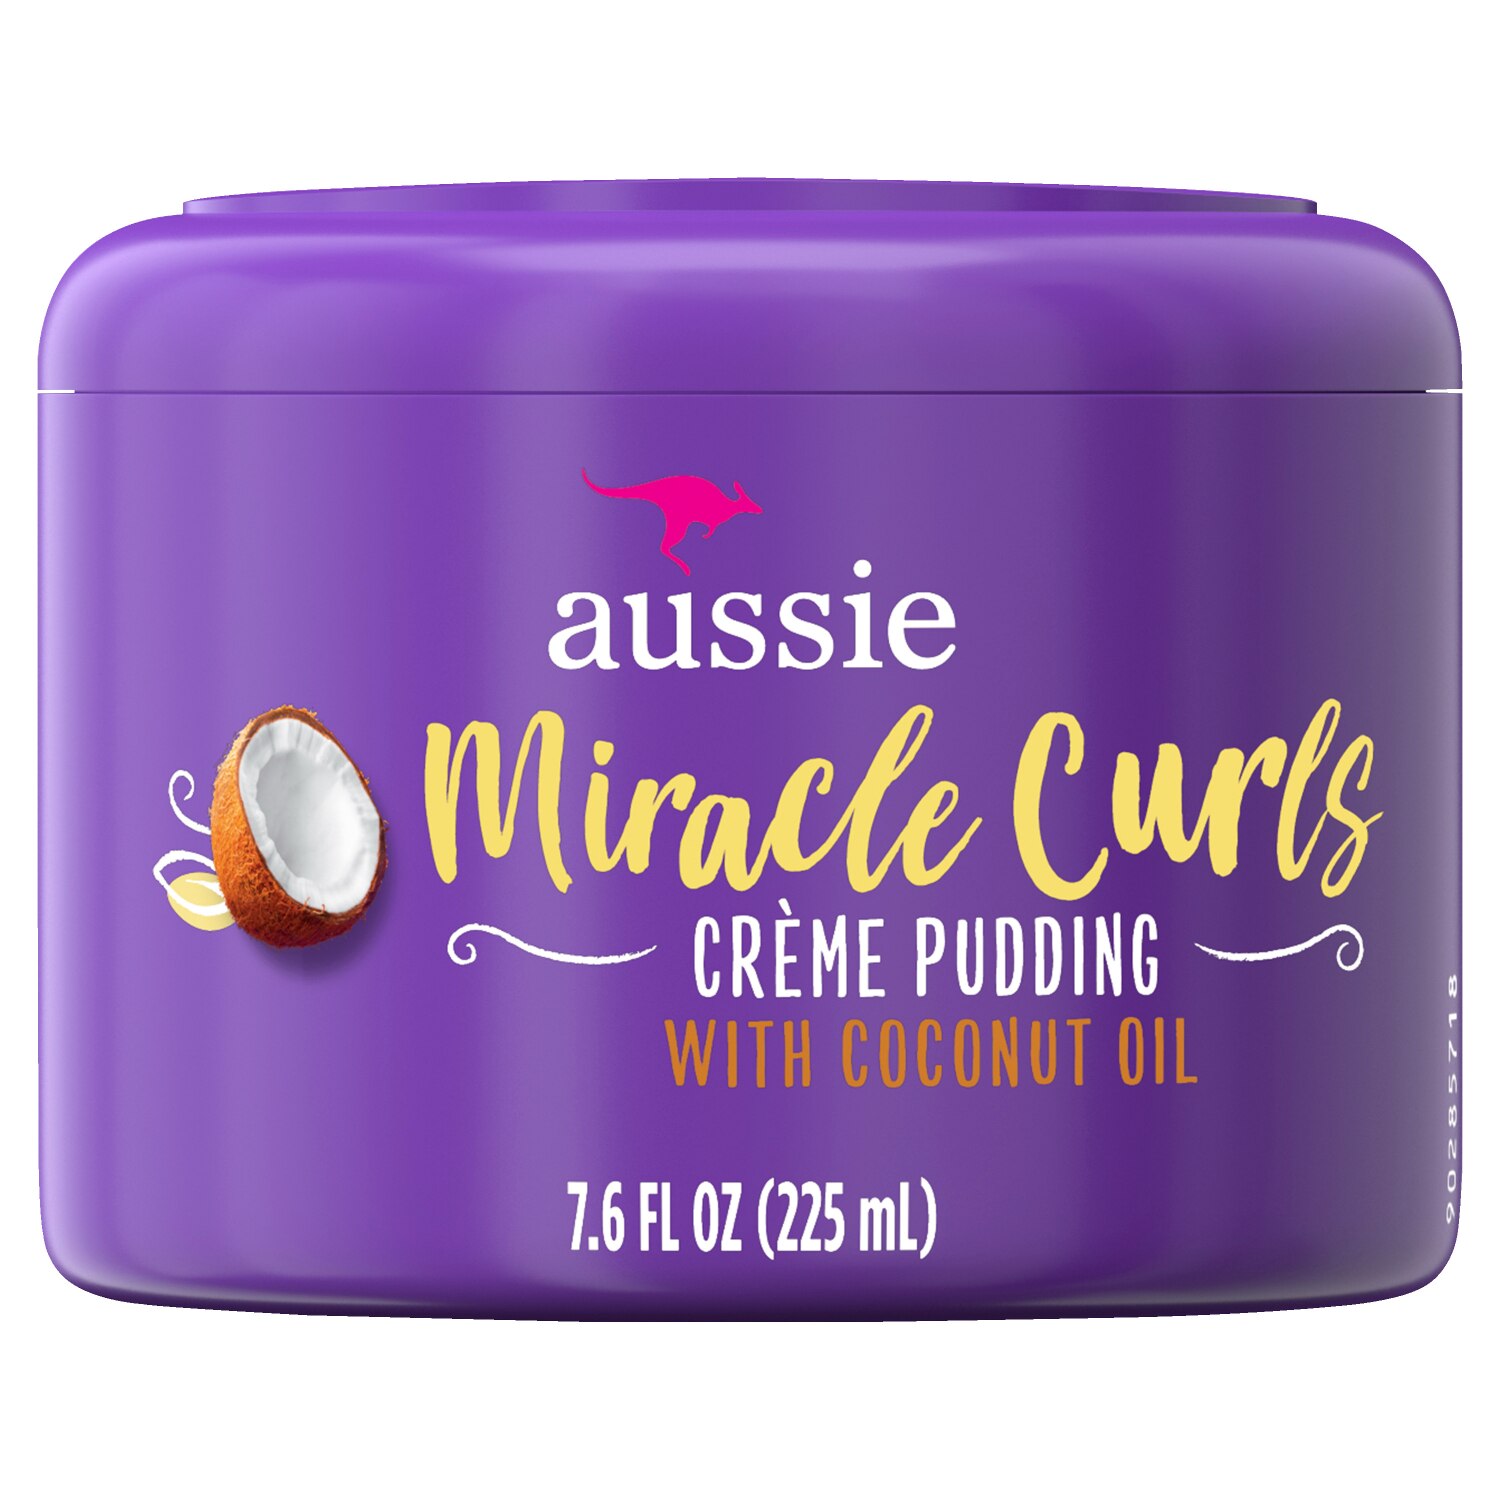 Aussie Miracle Curls Cream Pudding